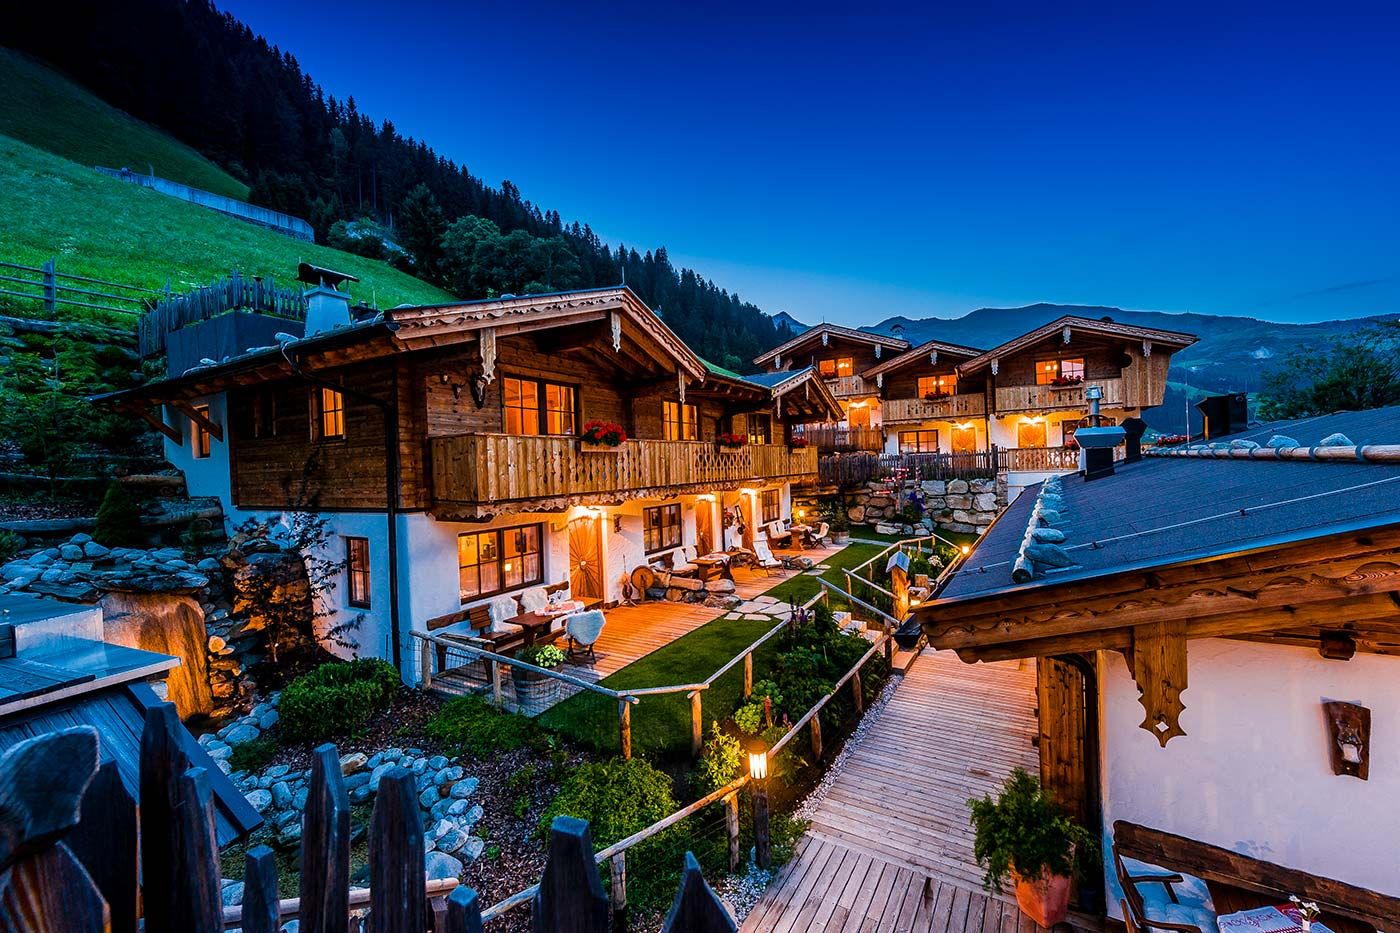 The Alpine village "Anno Dazumal" - originally, traditional, remarkable.